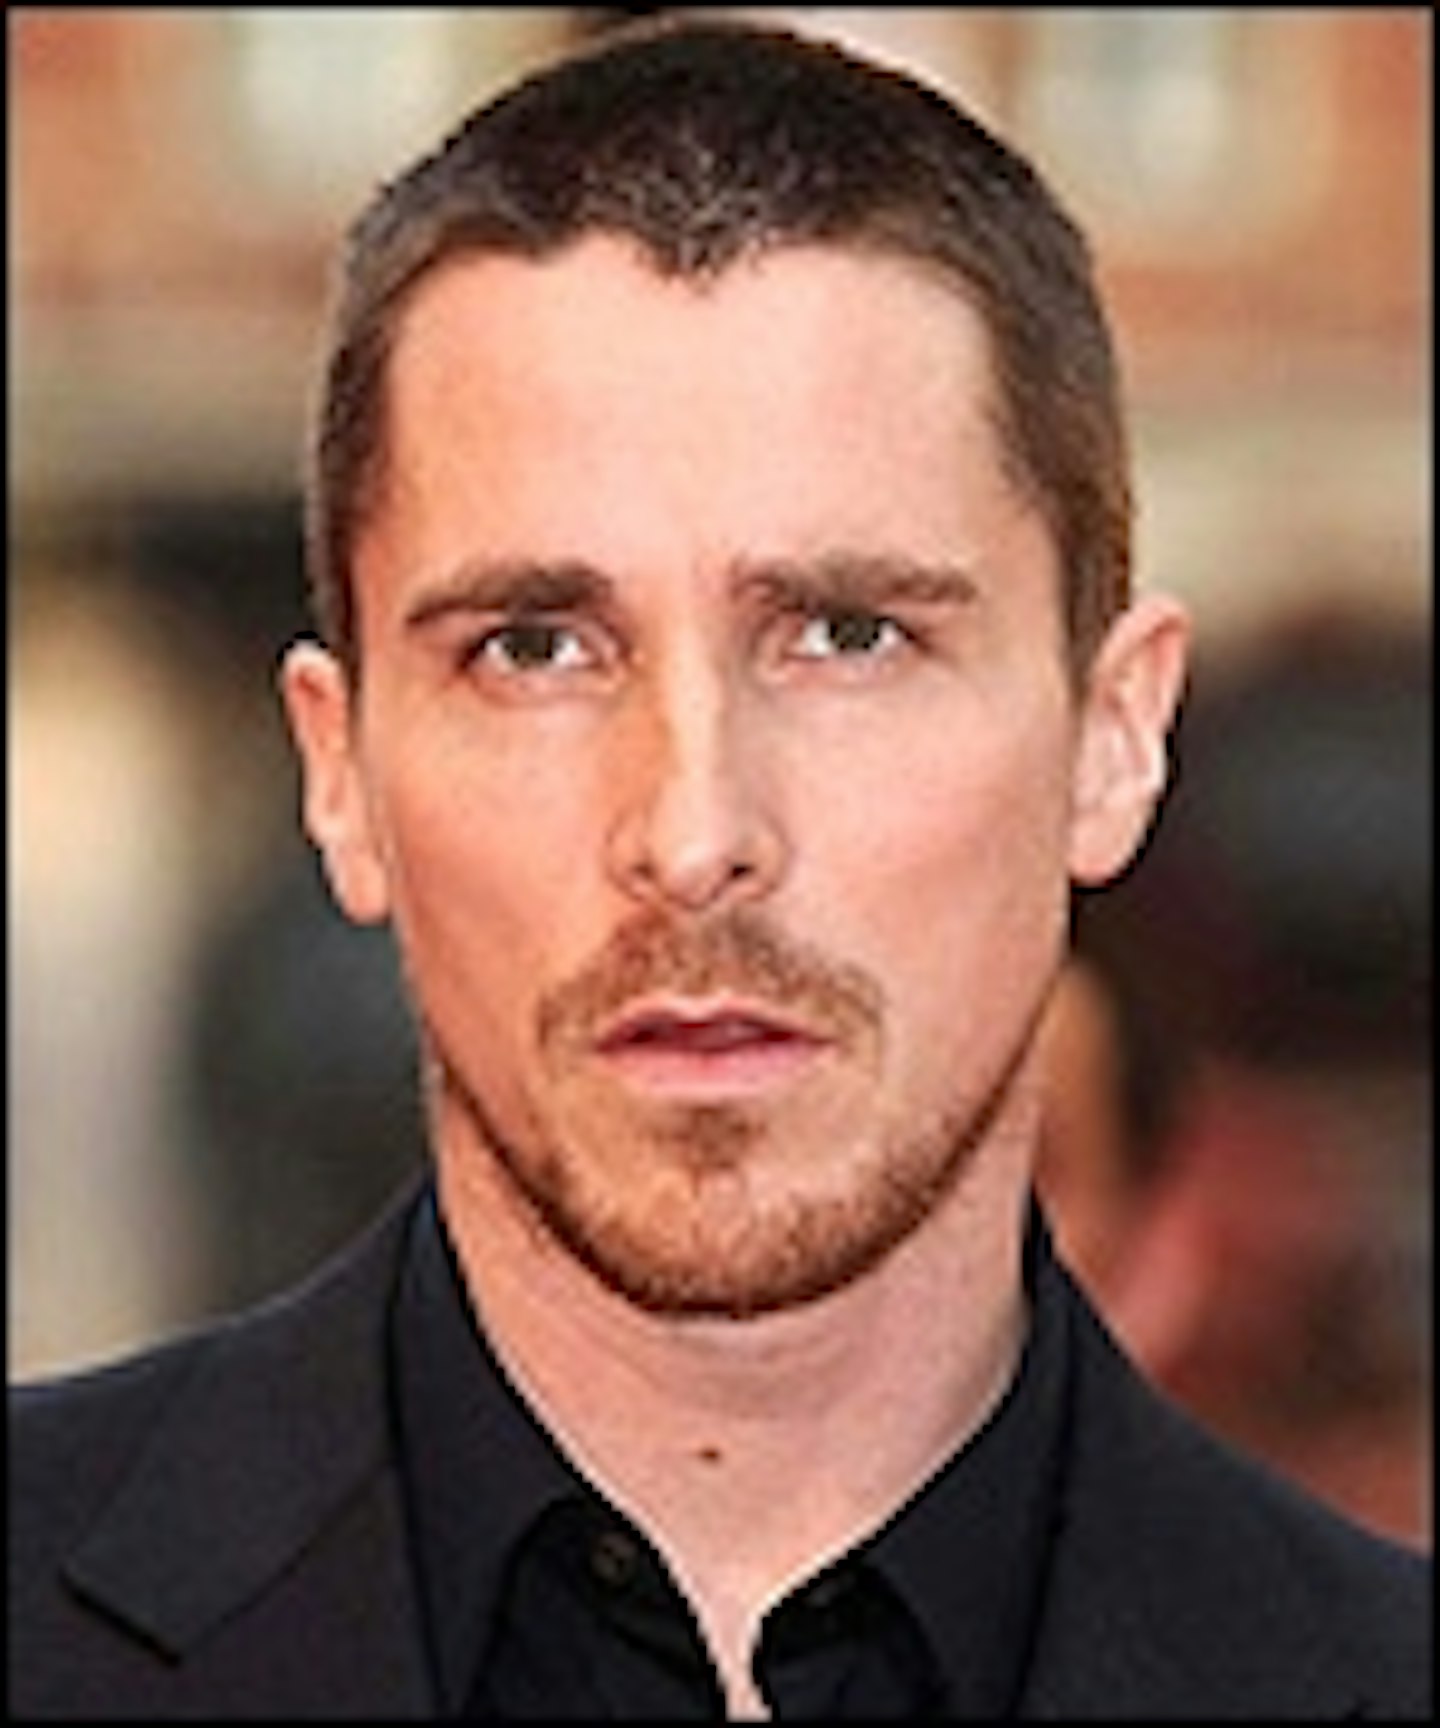 Christian Bale Off To Concrete Island?